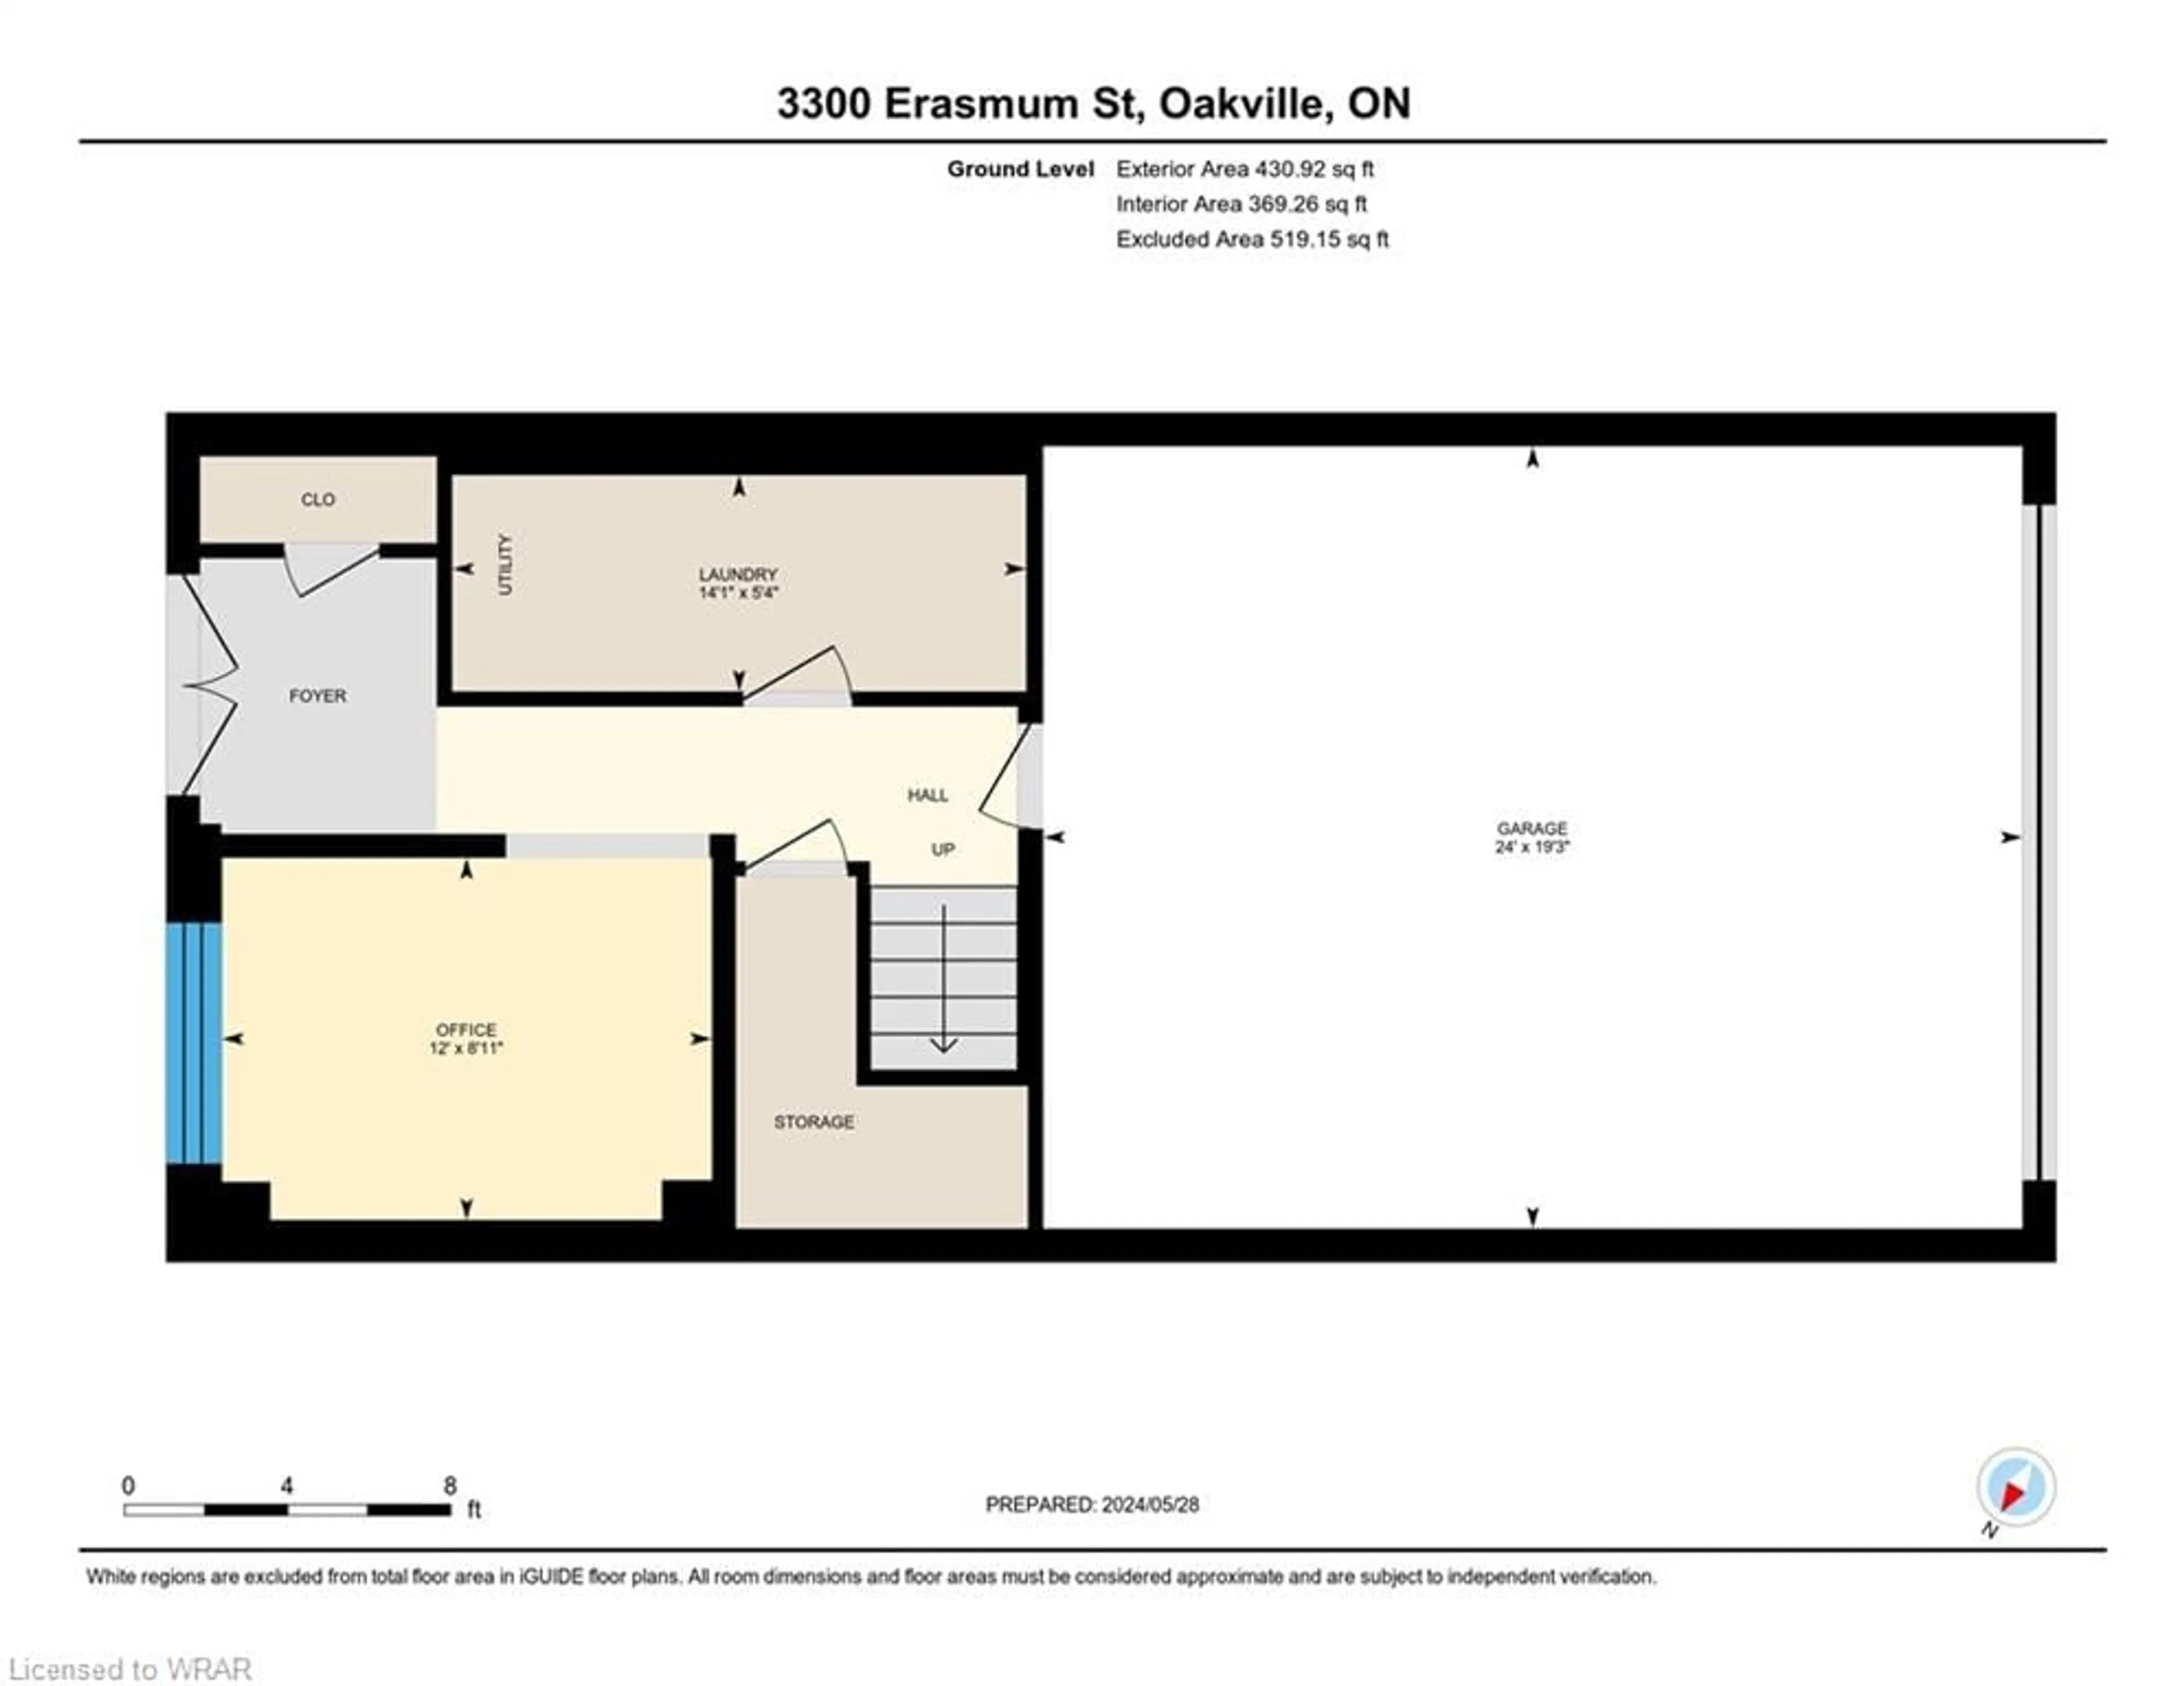 Floor plan for 3300 Erasmum St, Oakville Ontario L6M 0X3